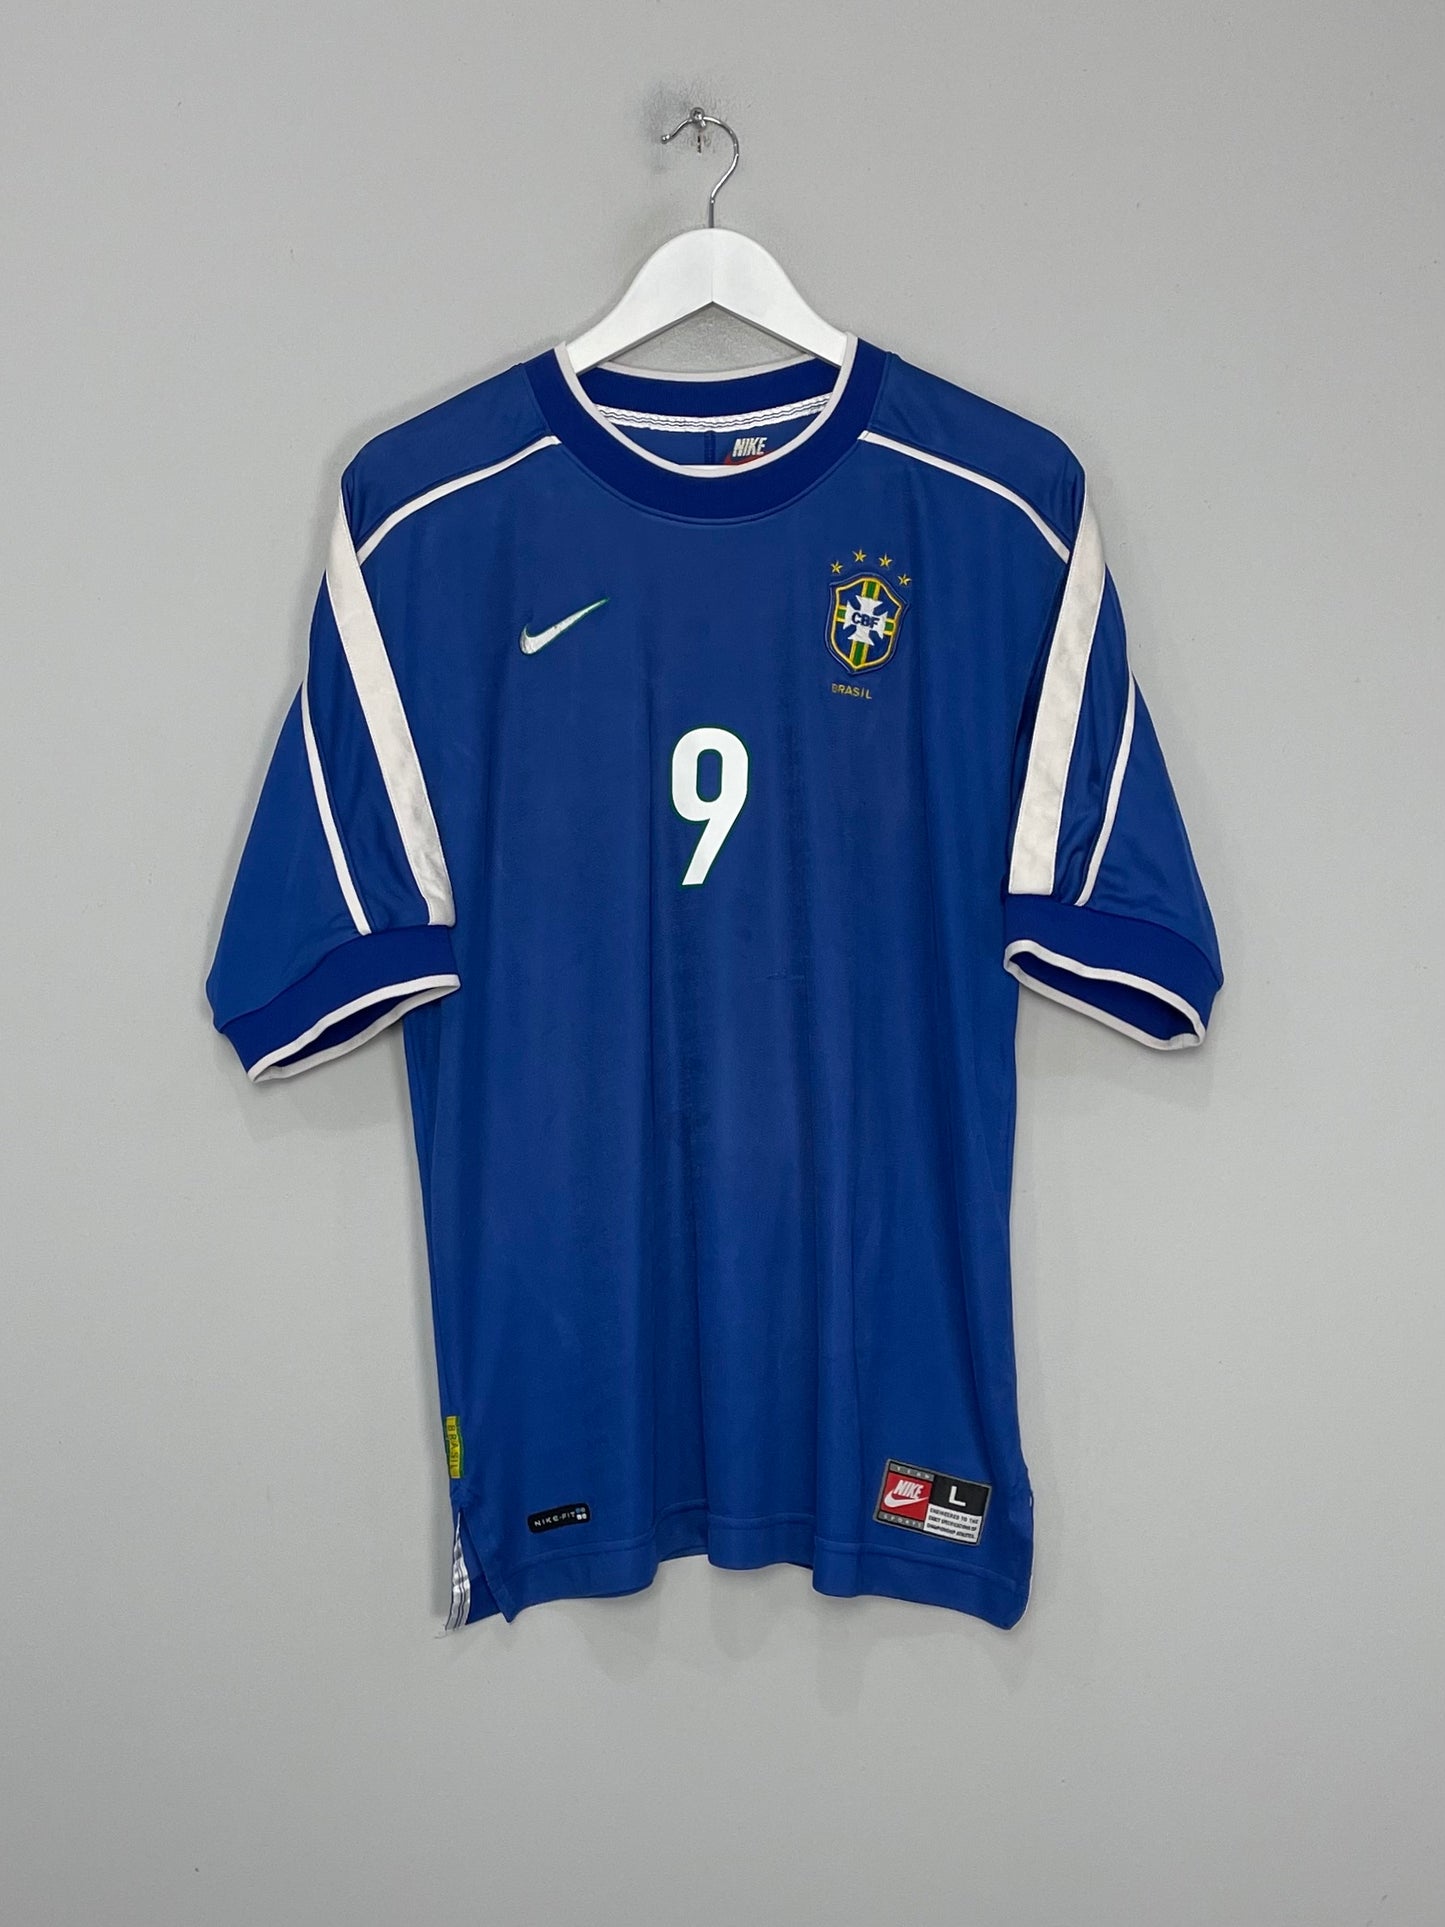 Ronaldo Nike Brazil 2004 Away Soccer Jersey Shirt L